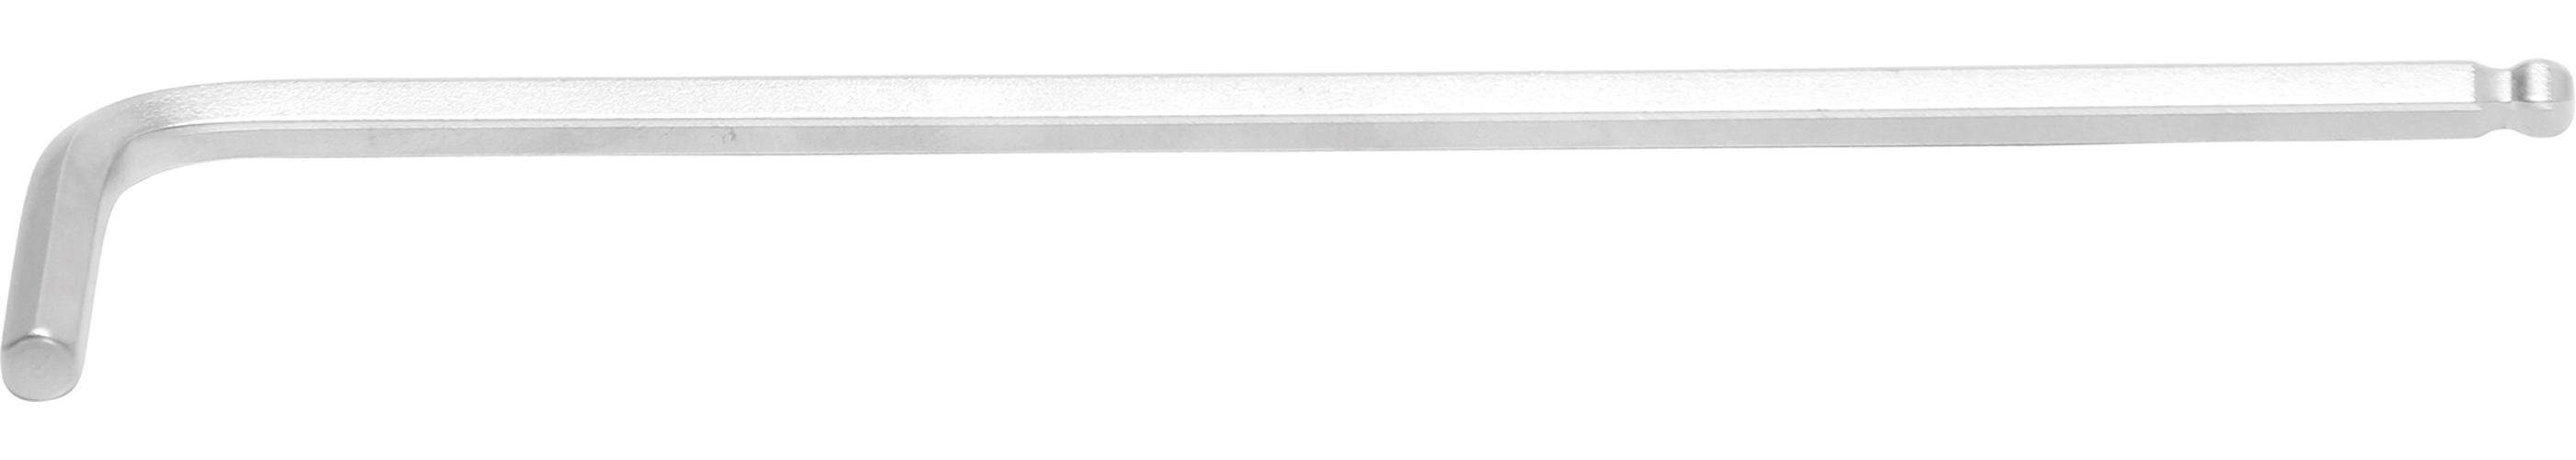 BGS technic Bit-Schraubendreher Winkelschlüssel, extra lang, Innensechskant / Innensechskant mit Kugelkopf 5 mm